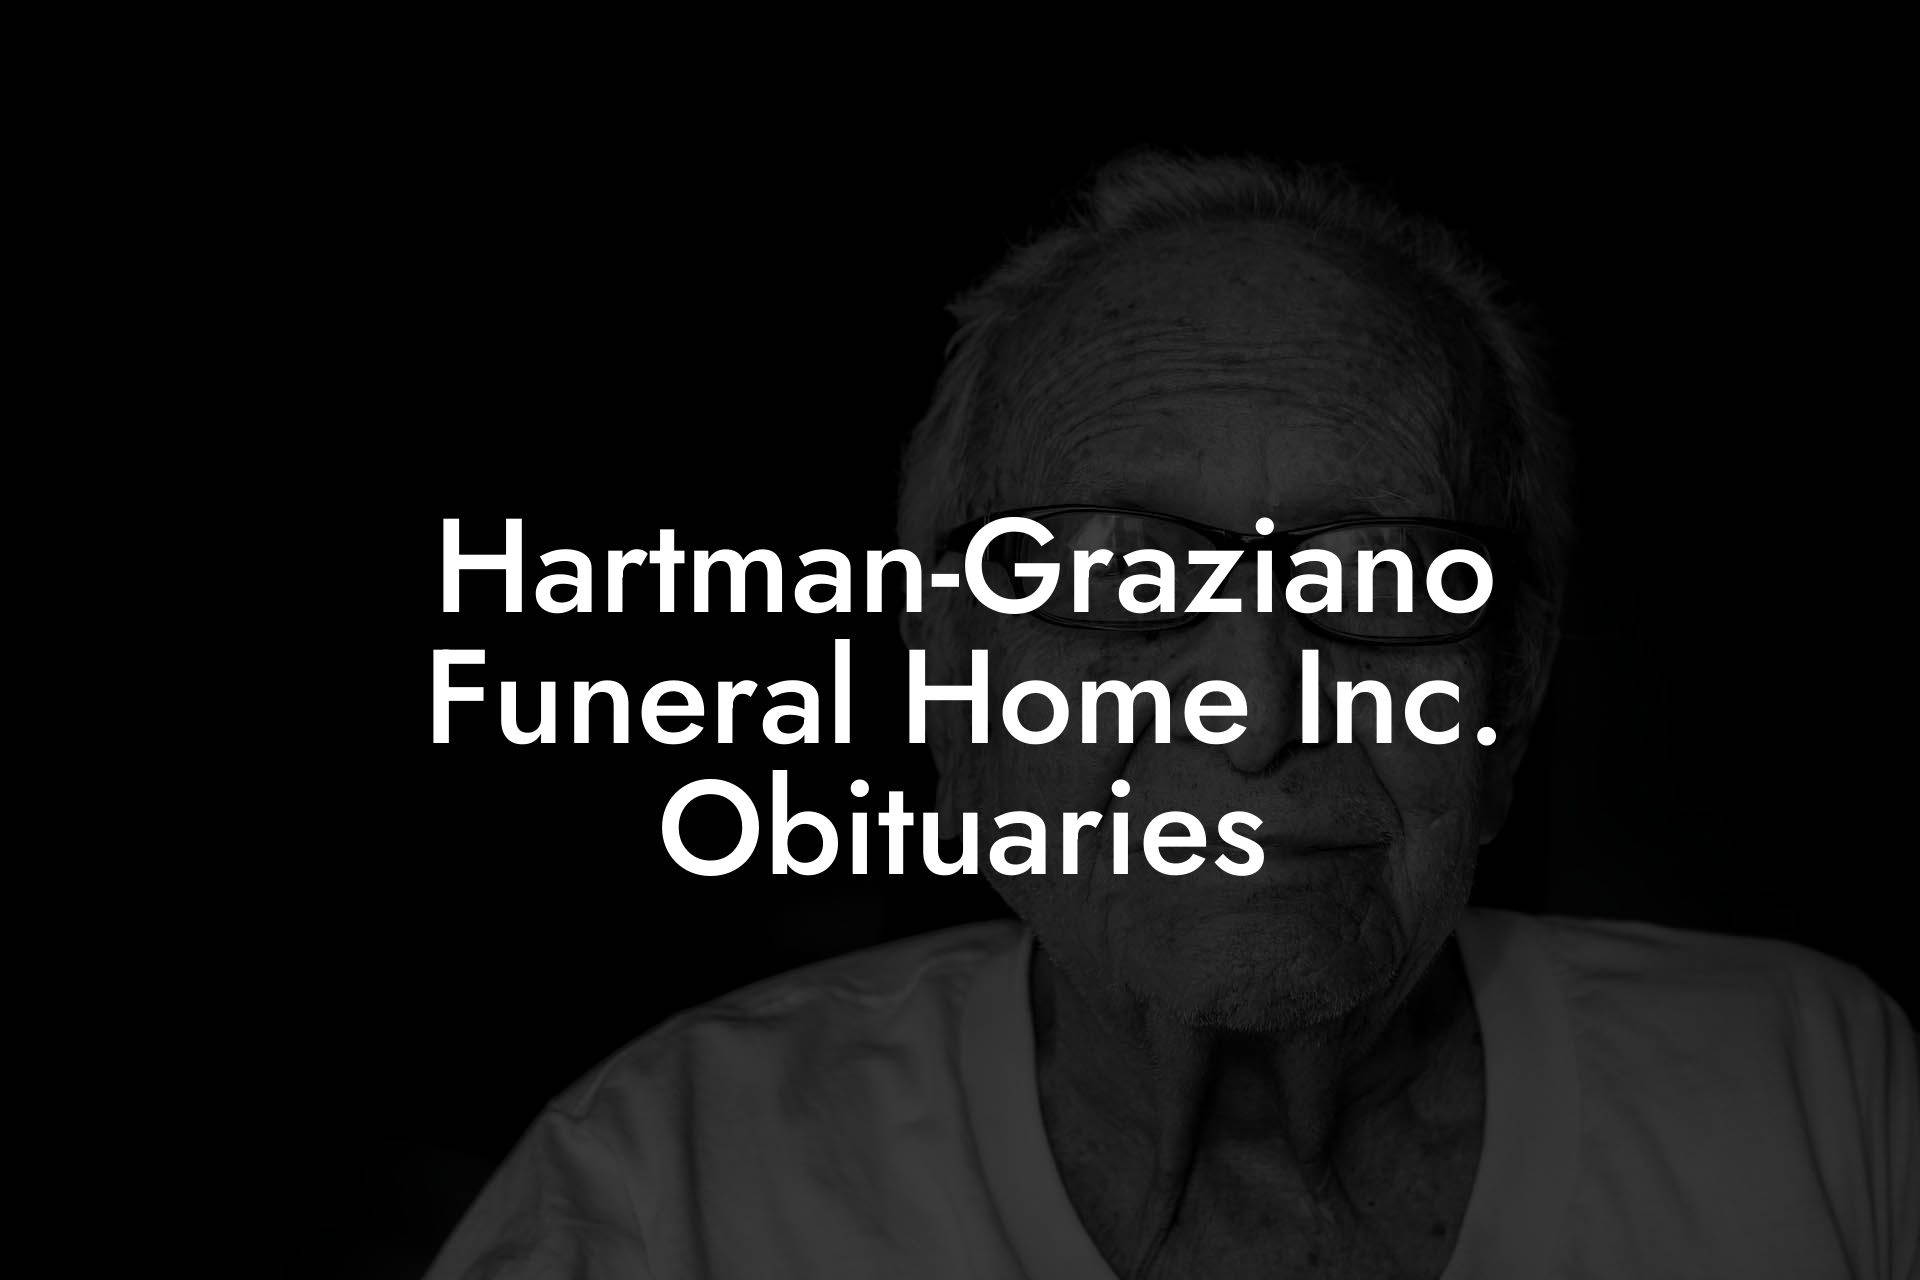 Hartman-Graziano Funeral Home Inc. Obituaries